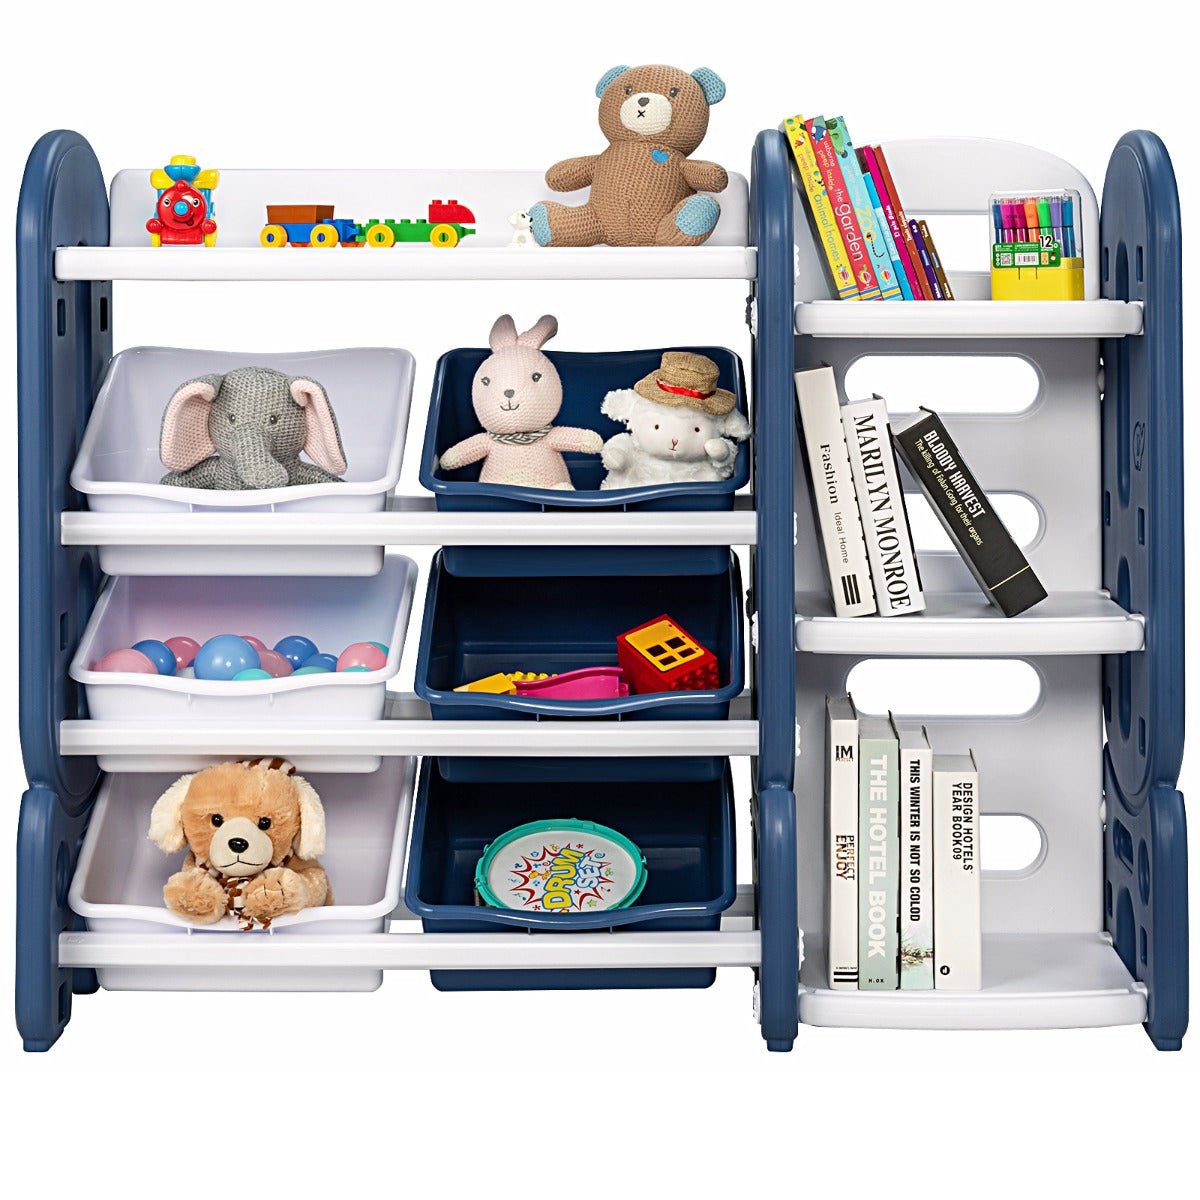 Kids Bedroom Organization - Blue Toy Storage with Bookshelf